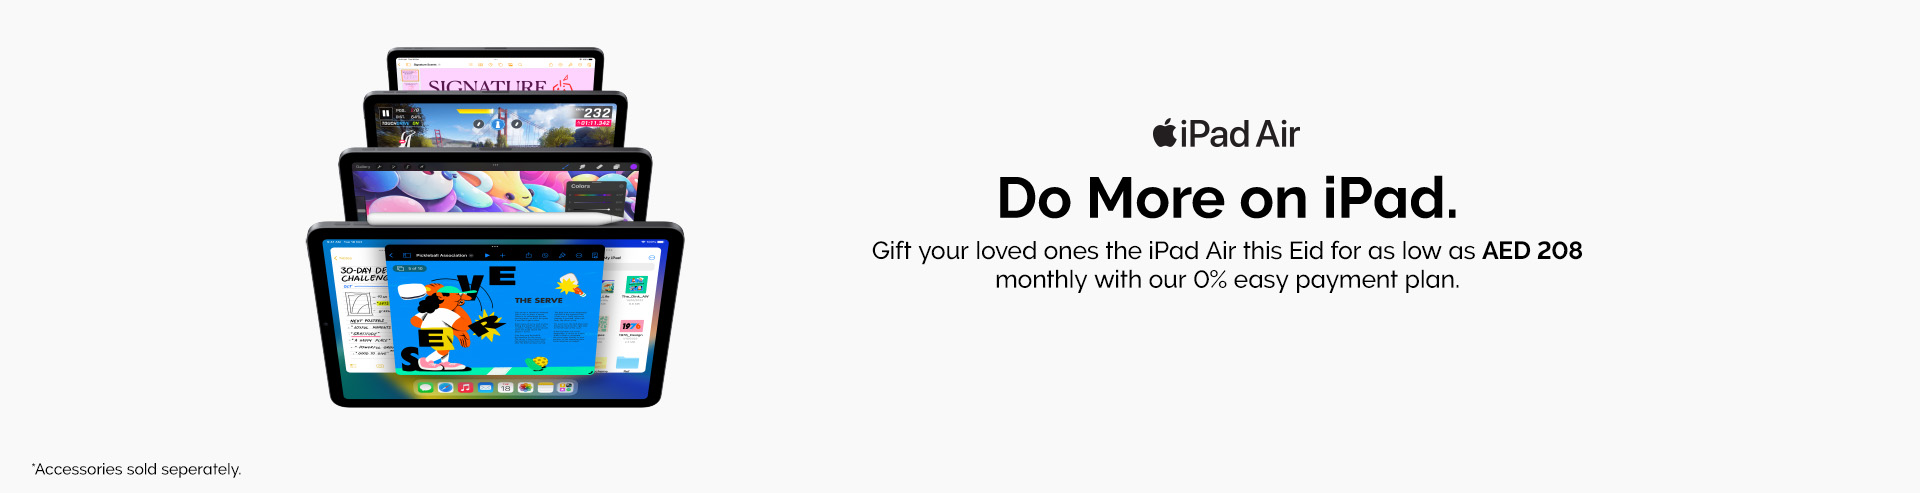 VM-Hero-Apple-Q2-iPad-EID-Gifting-1920x493.jpg